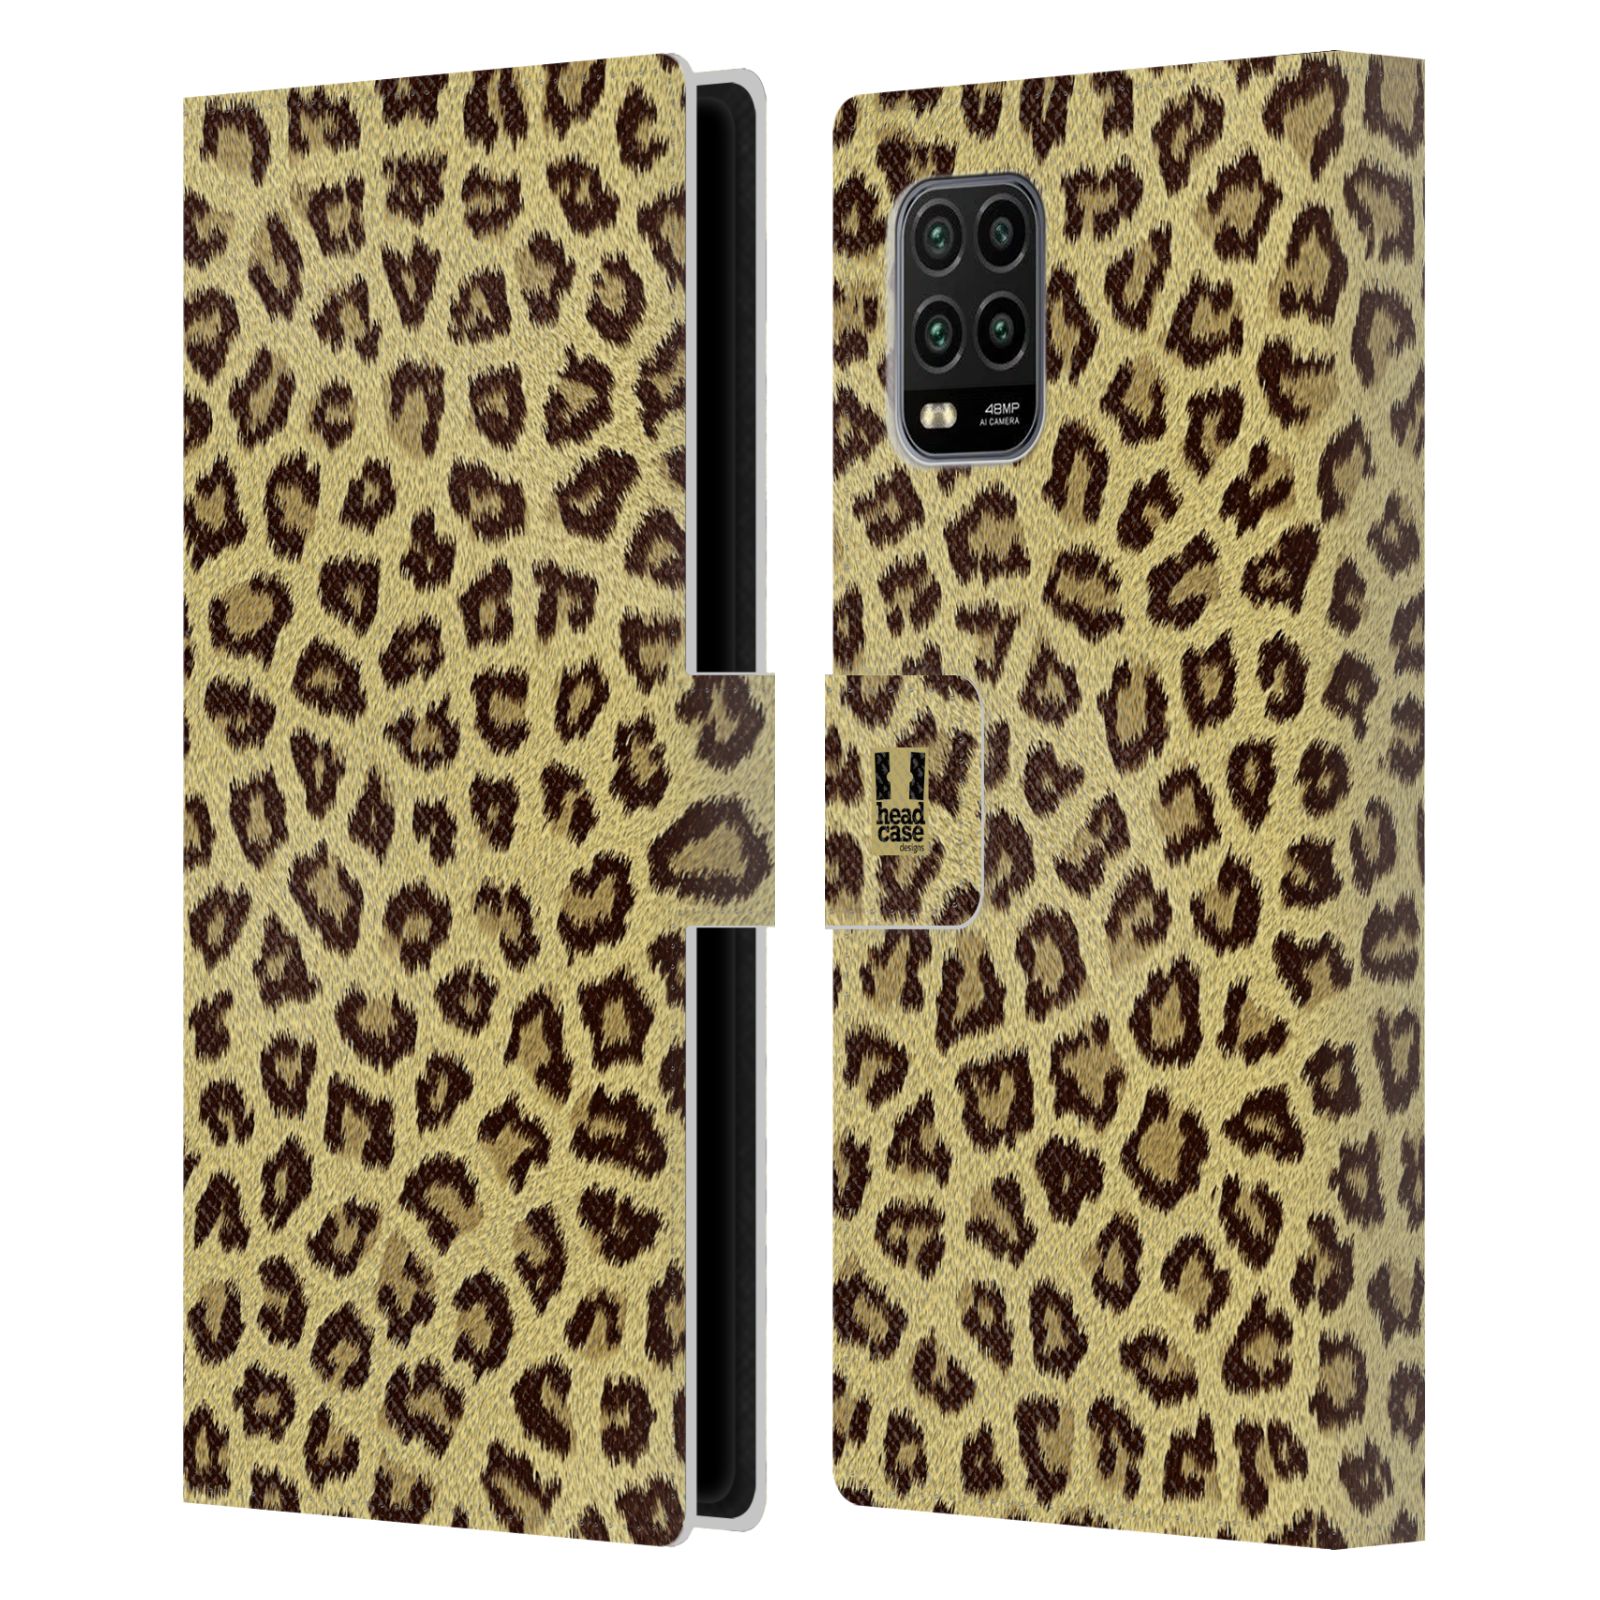 Pouzdro na mobil Xiaomi Mi 10 LITE zvíře srst divoká kolekce jaguár, gepard